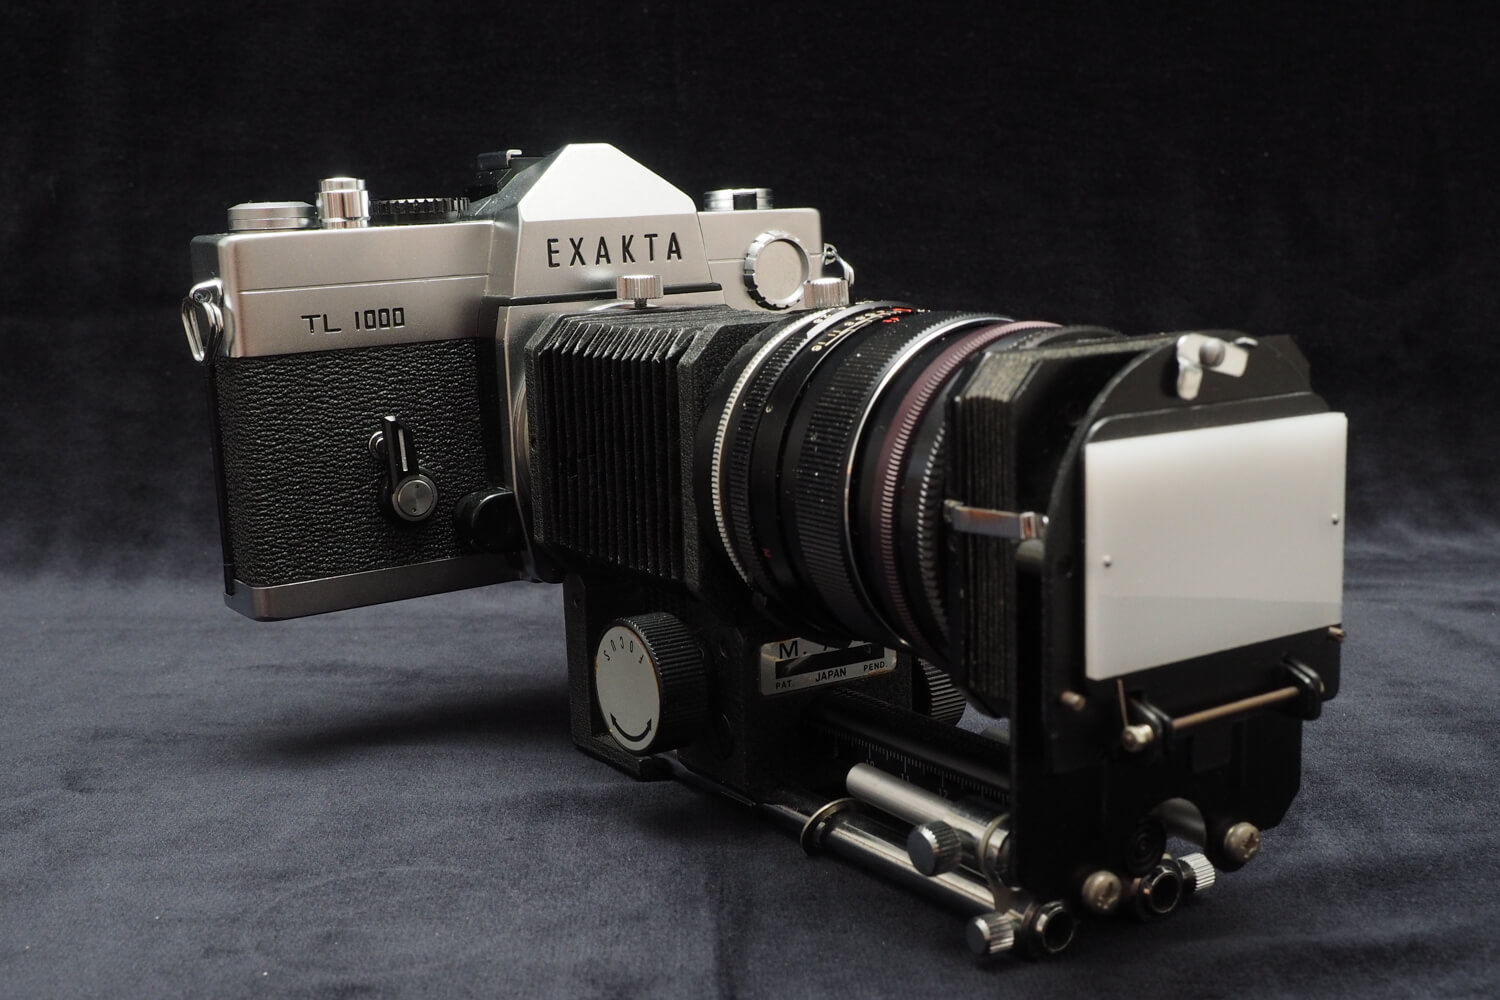 Exakta TL 1000 with Bellows, slide copier and Beroflex 50mm f/2.8 lens